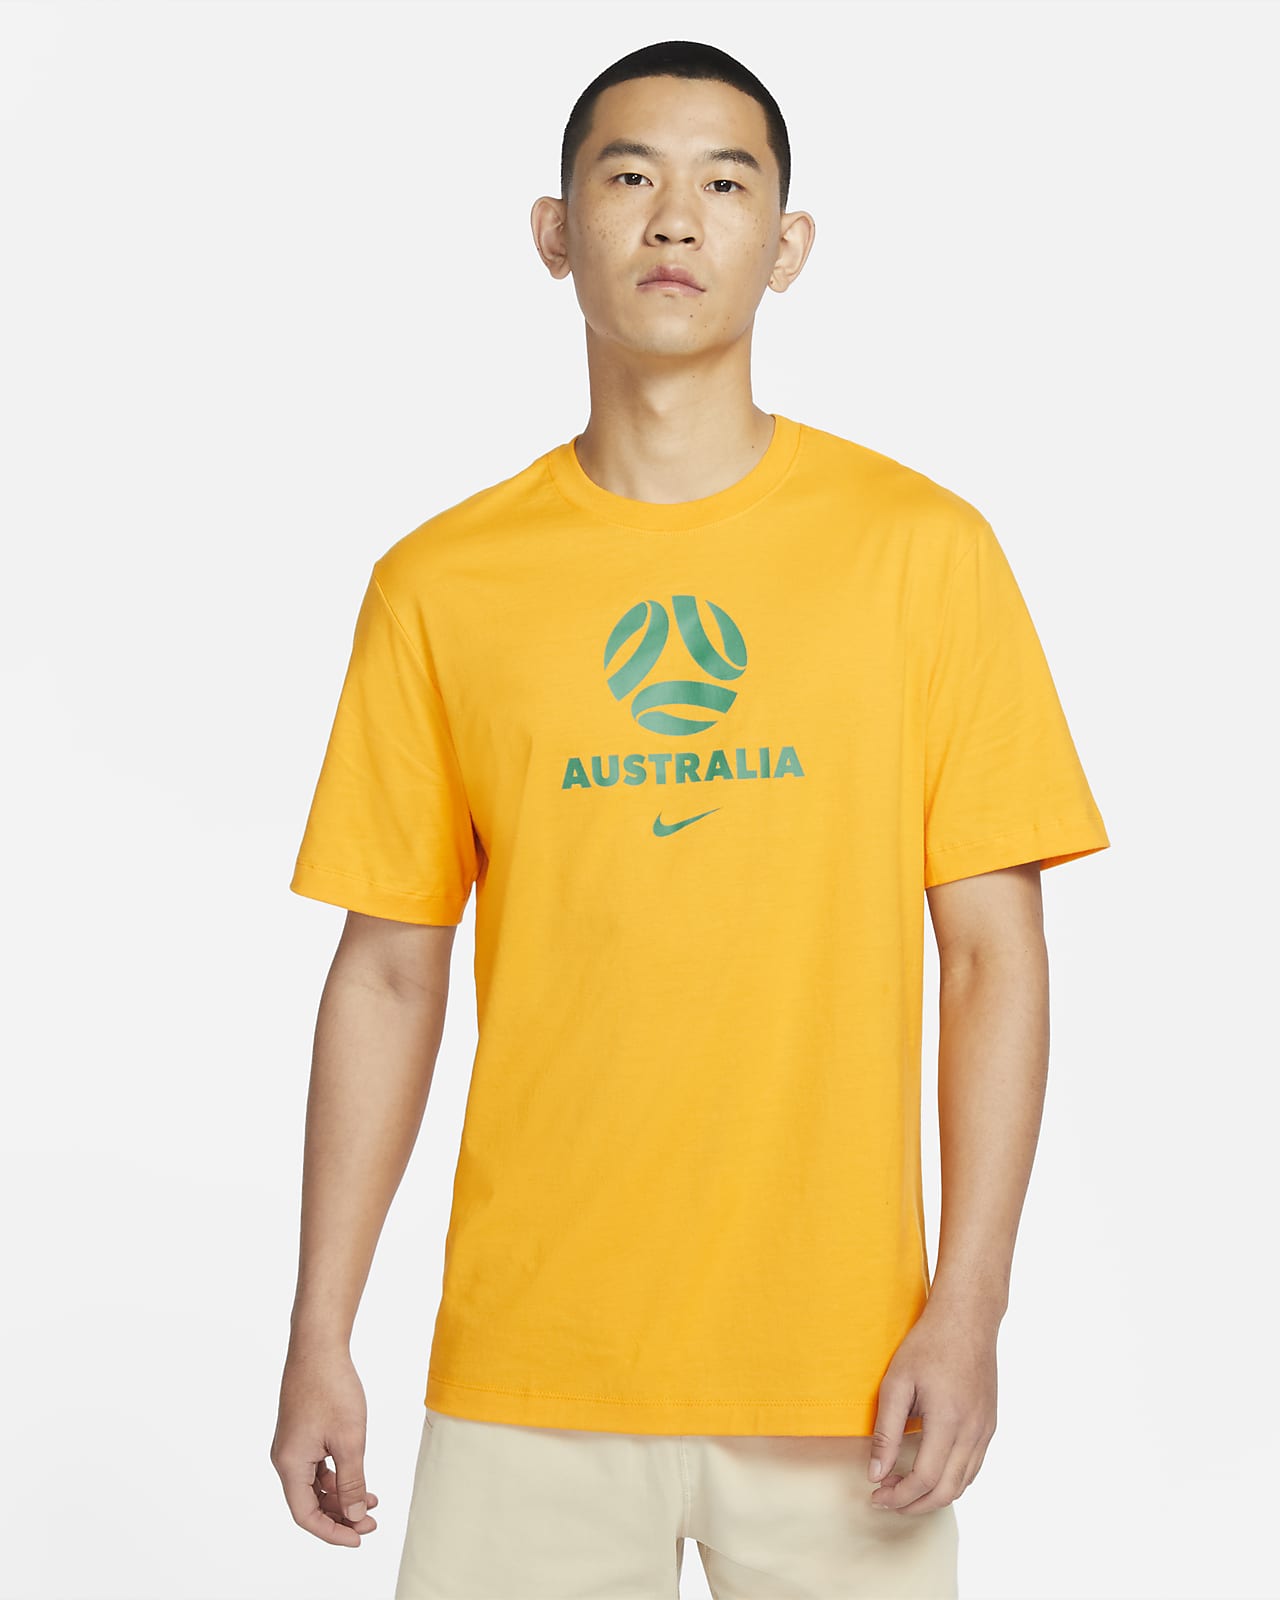 Australia Men's Nike T-Shirt